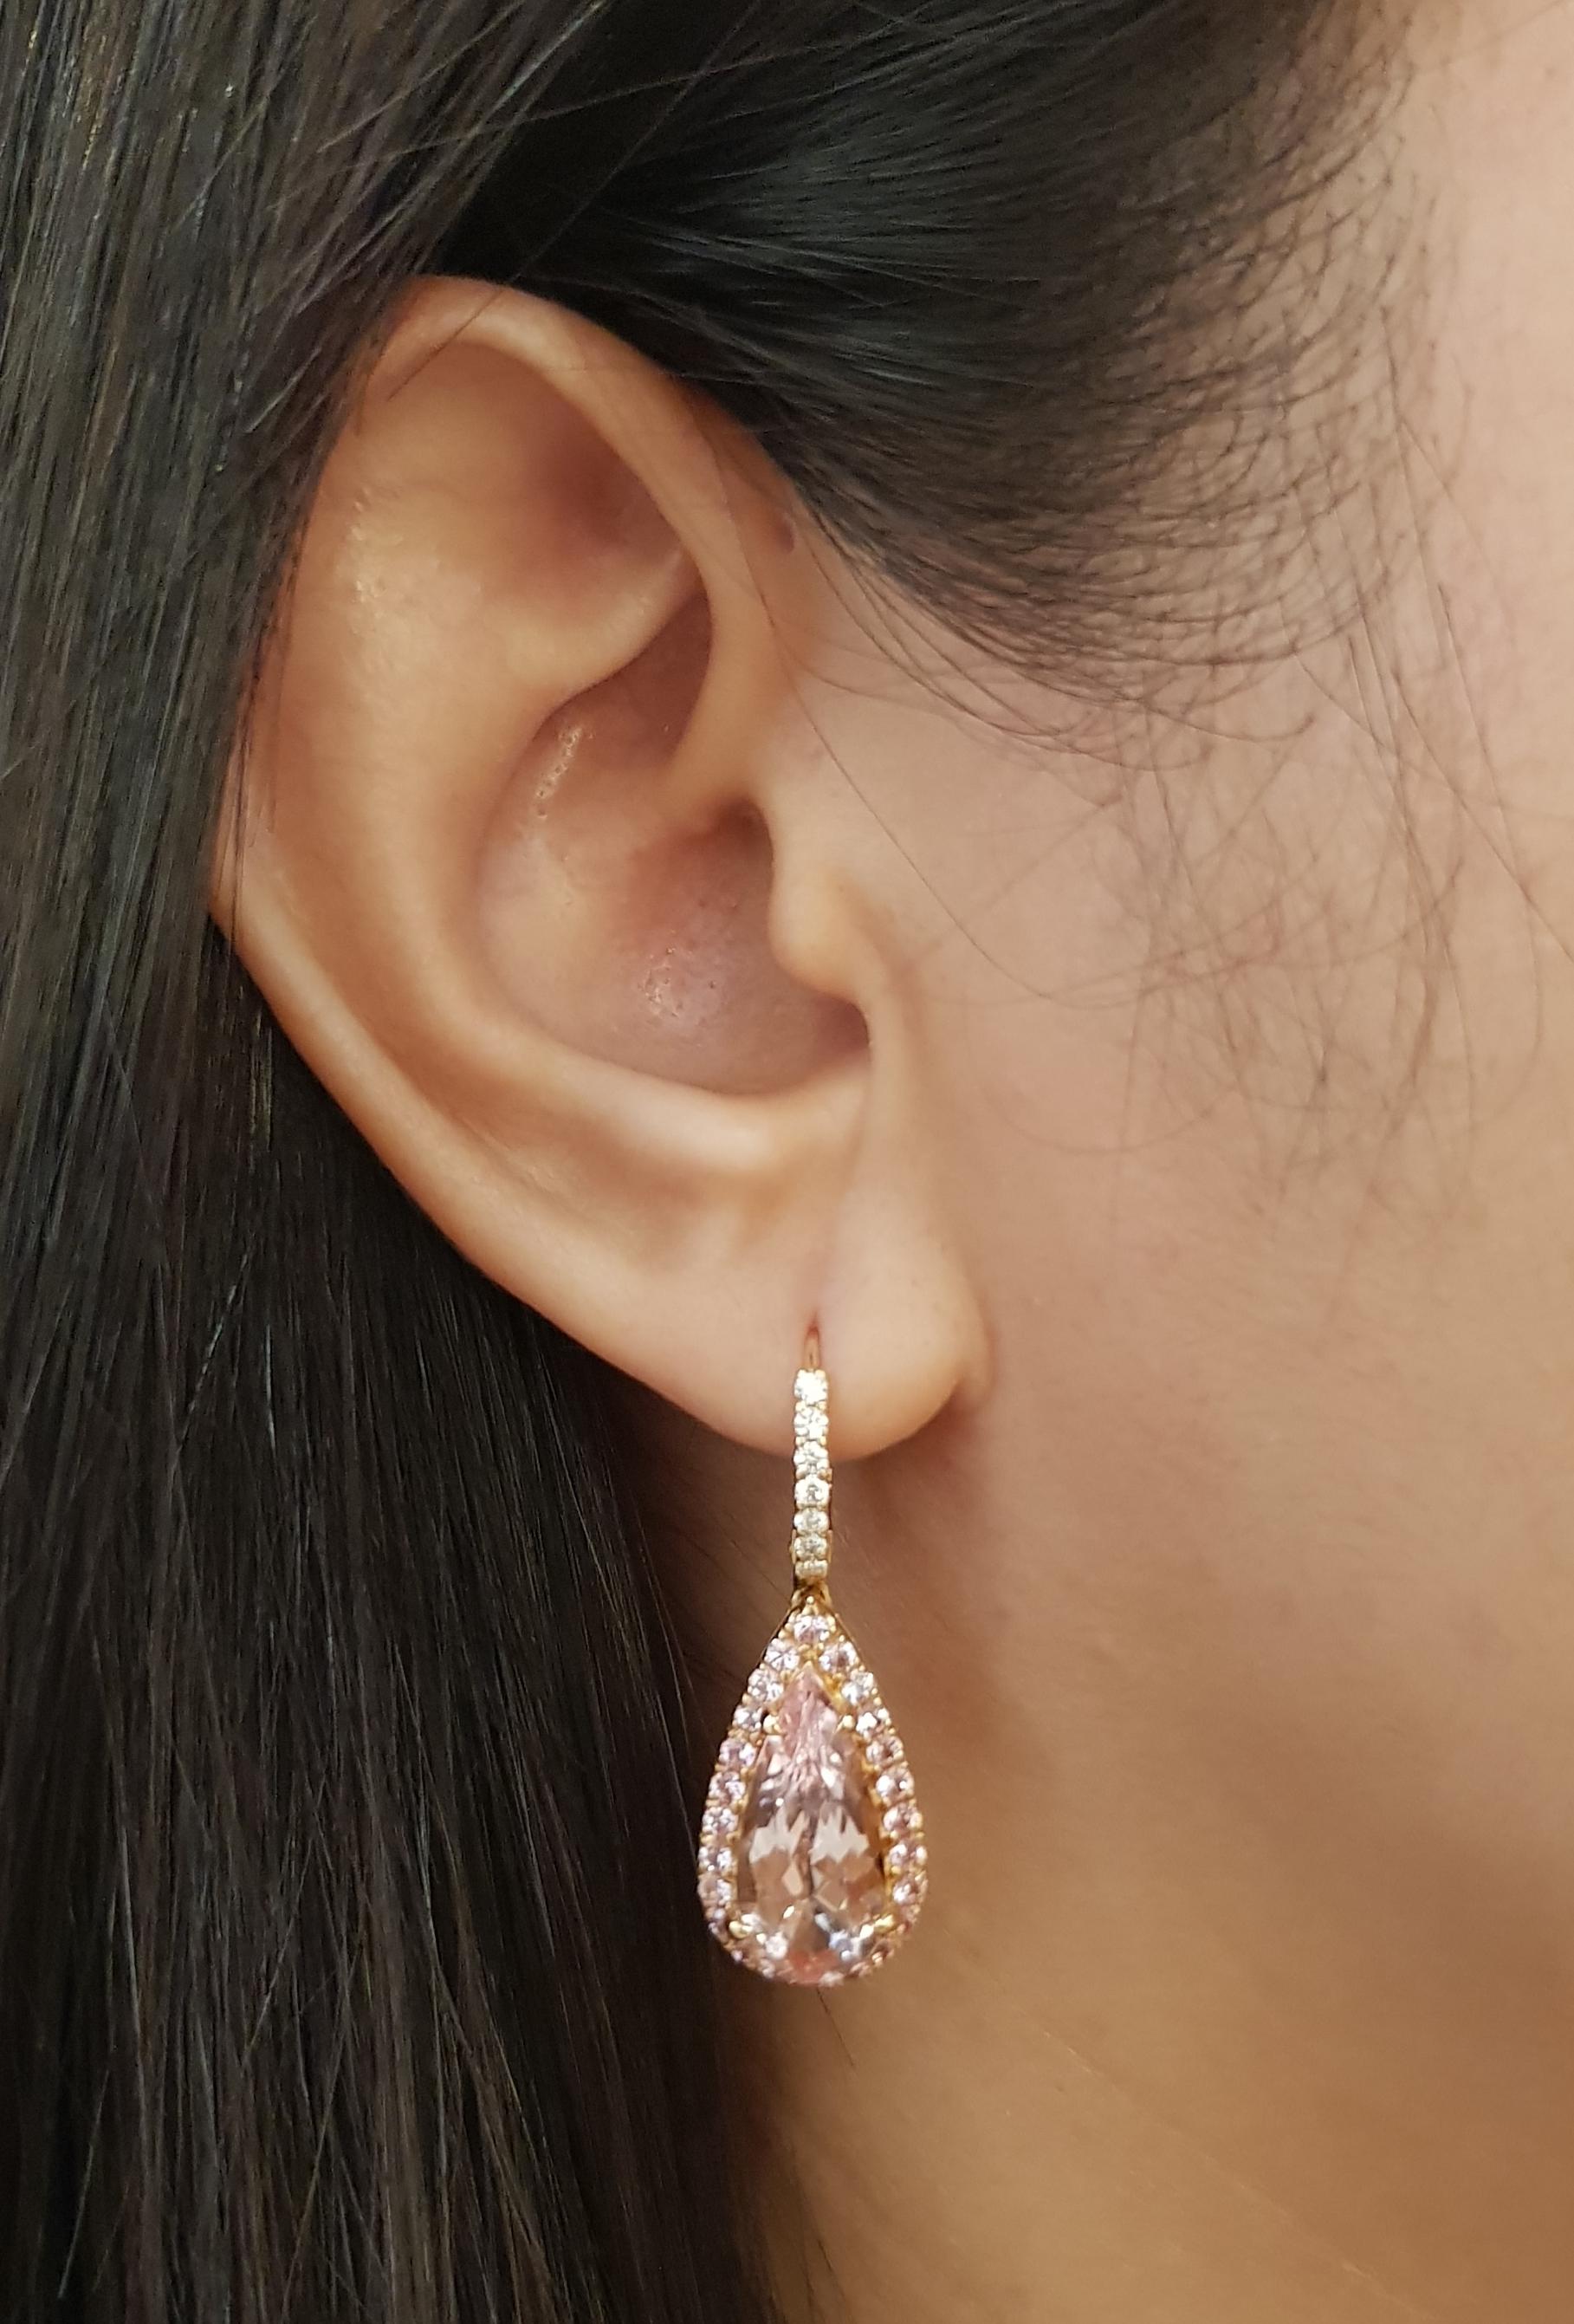 Morganite 7.56 carats, Pink Sapphire 1.10 carats and Diamond 0.23 carat Earrings set in 18K Rose Gold Settings

Width: 1.2 cm 
Length: 3.4 cm
Total Weight: 8.52 grams

